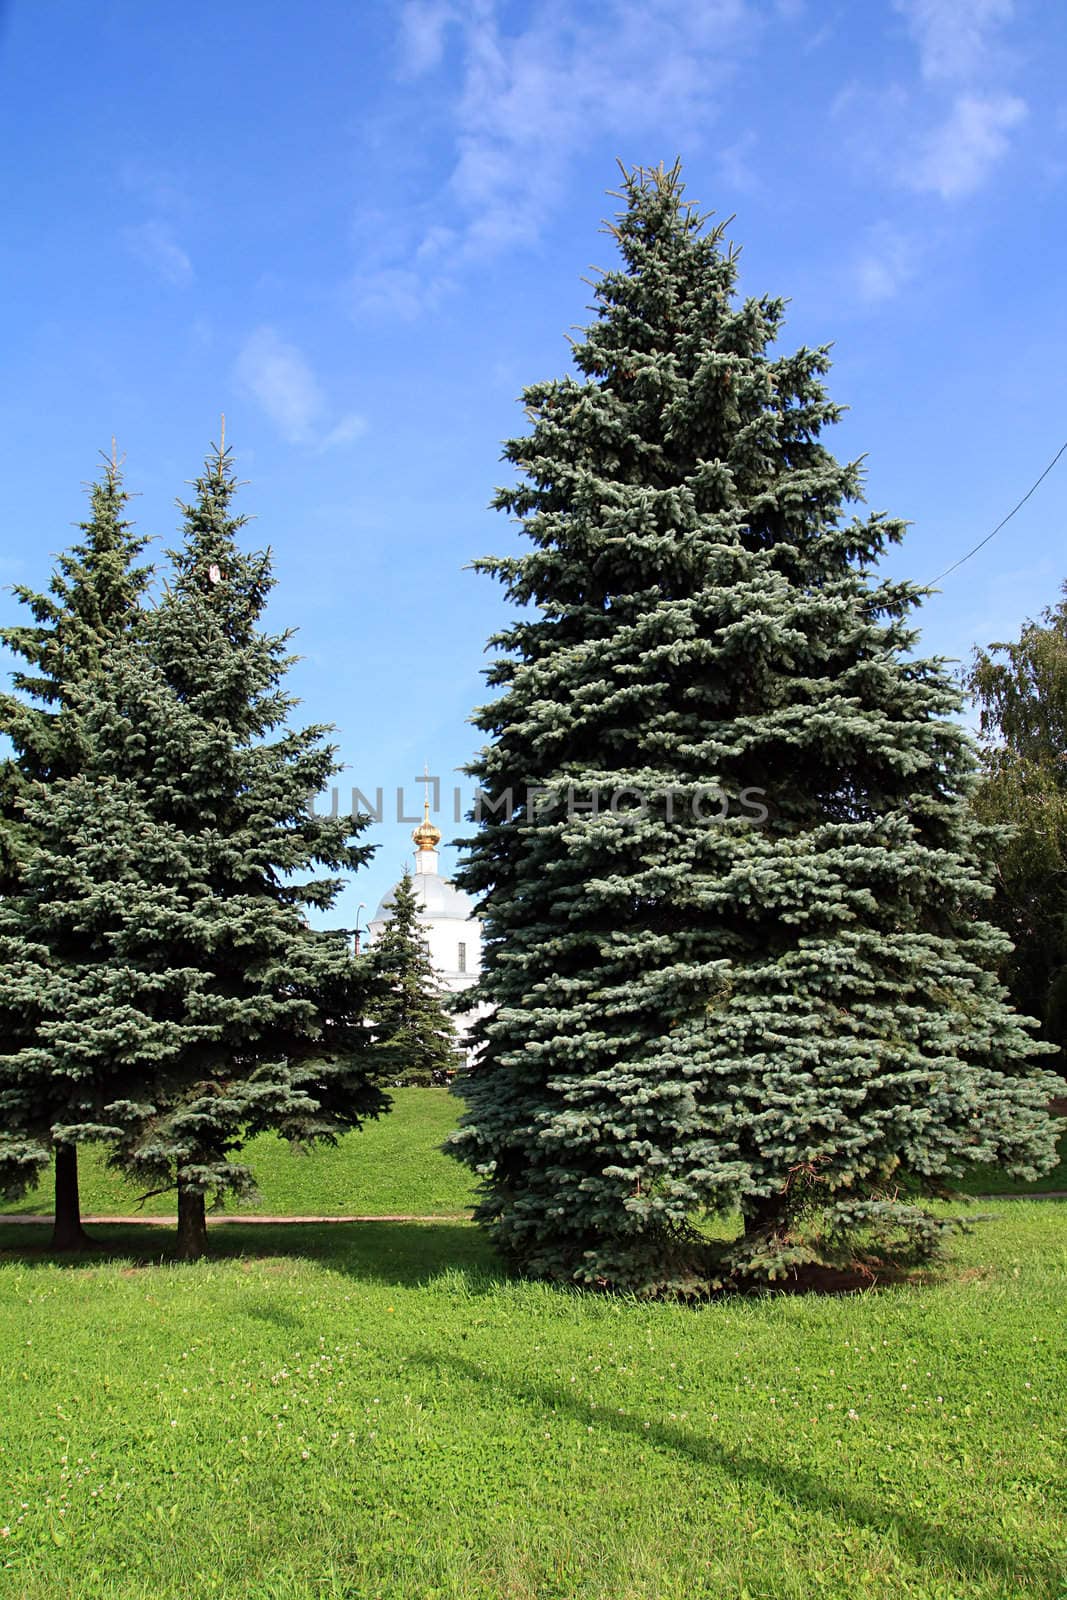 fir trees in park